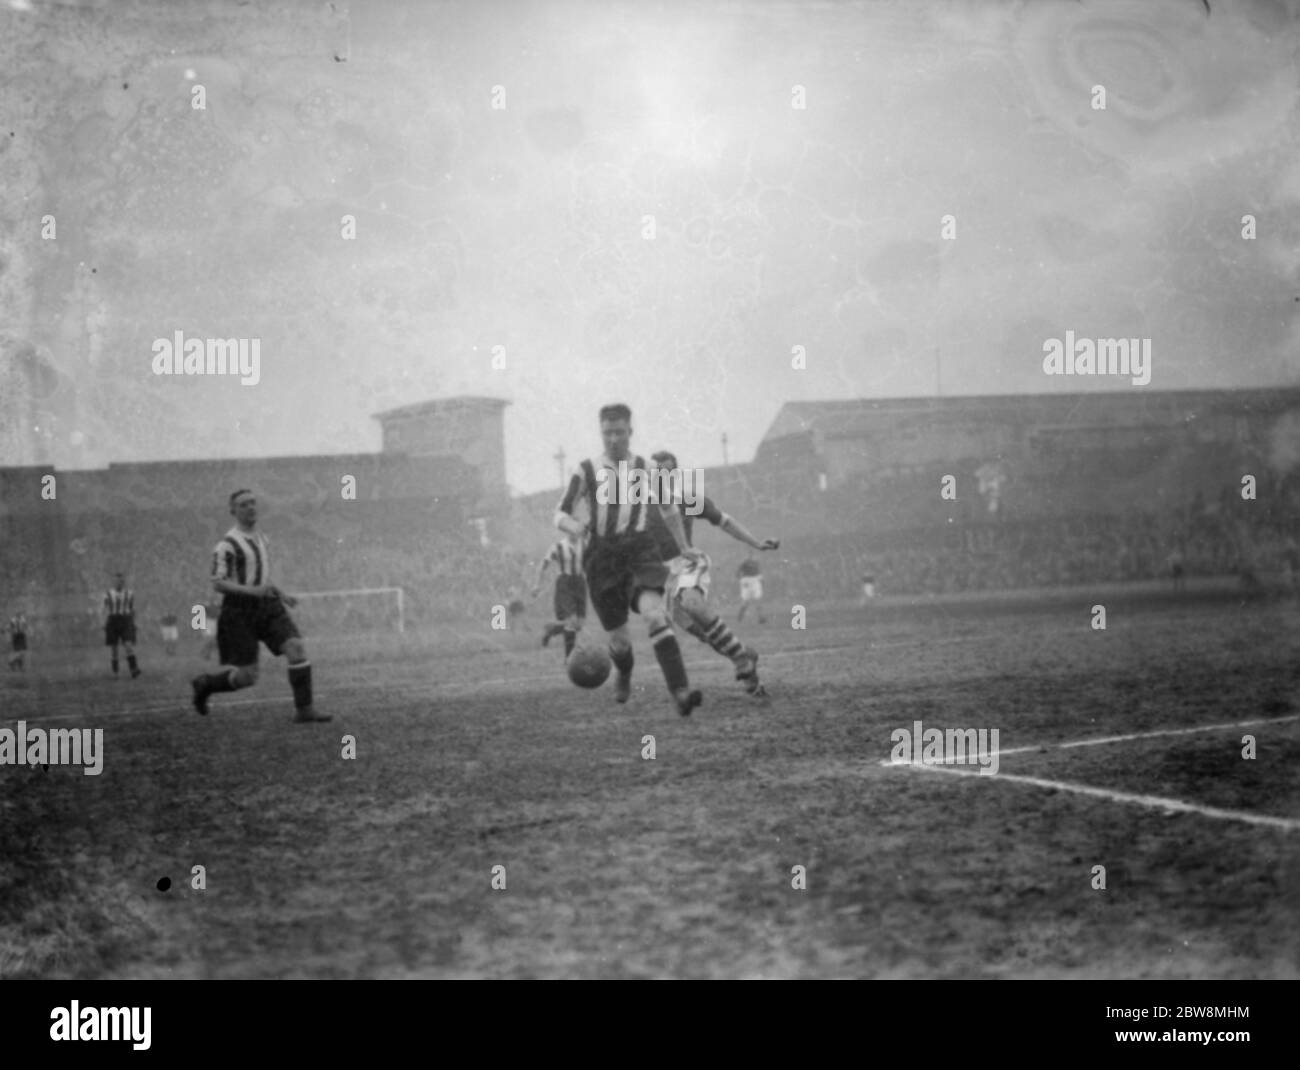 Millwall club de fútbol contra Notts County club de fútbol . Dos jugadores compiten por la pelota. 1936 Foto de stock